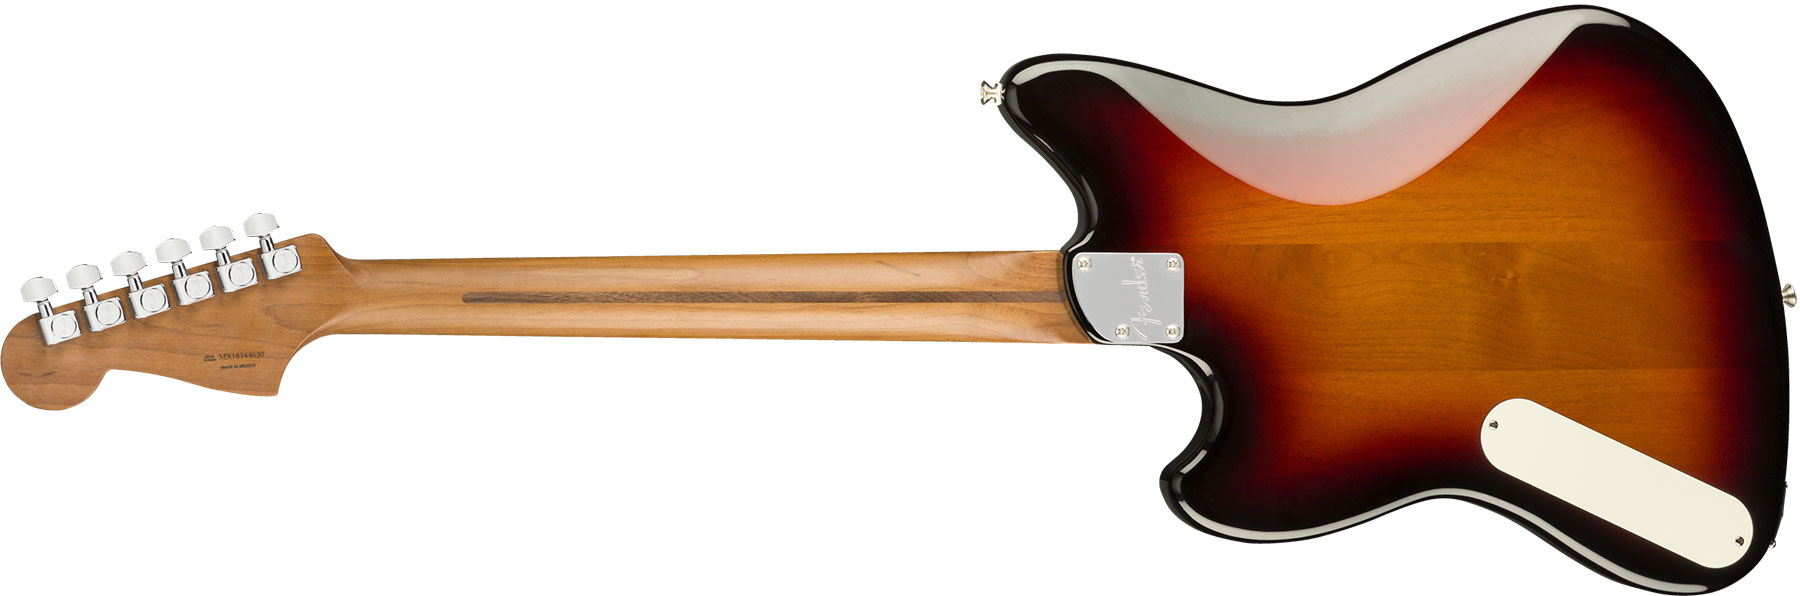 Fender Powercaster Alternate Reality Ltd Hp90 Ht Pf - 3-color Sunburst - Retro rock electric guitar - Variation 1